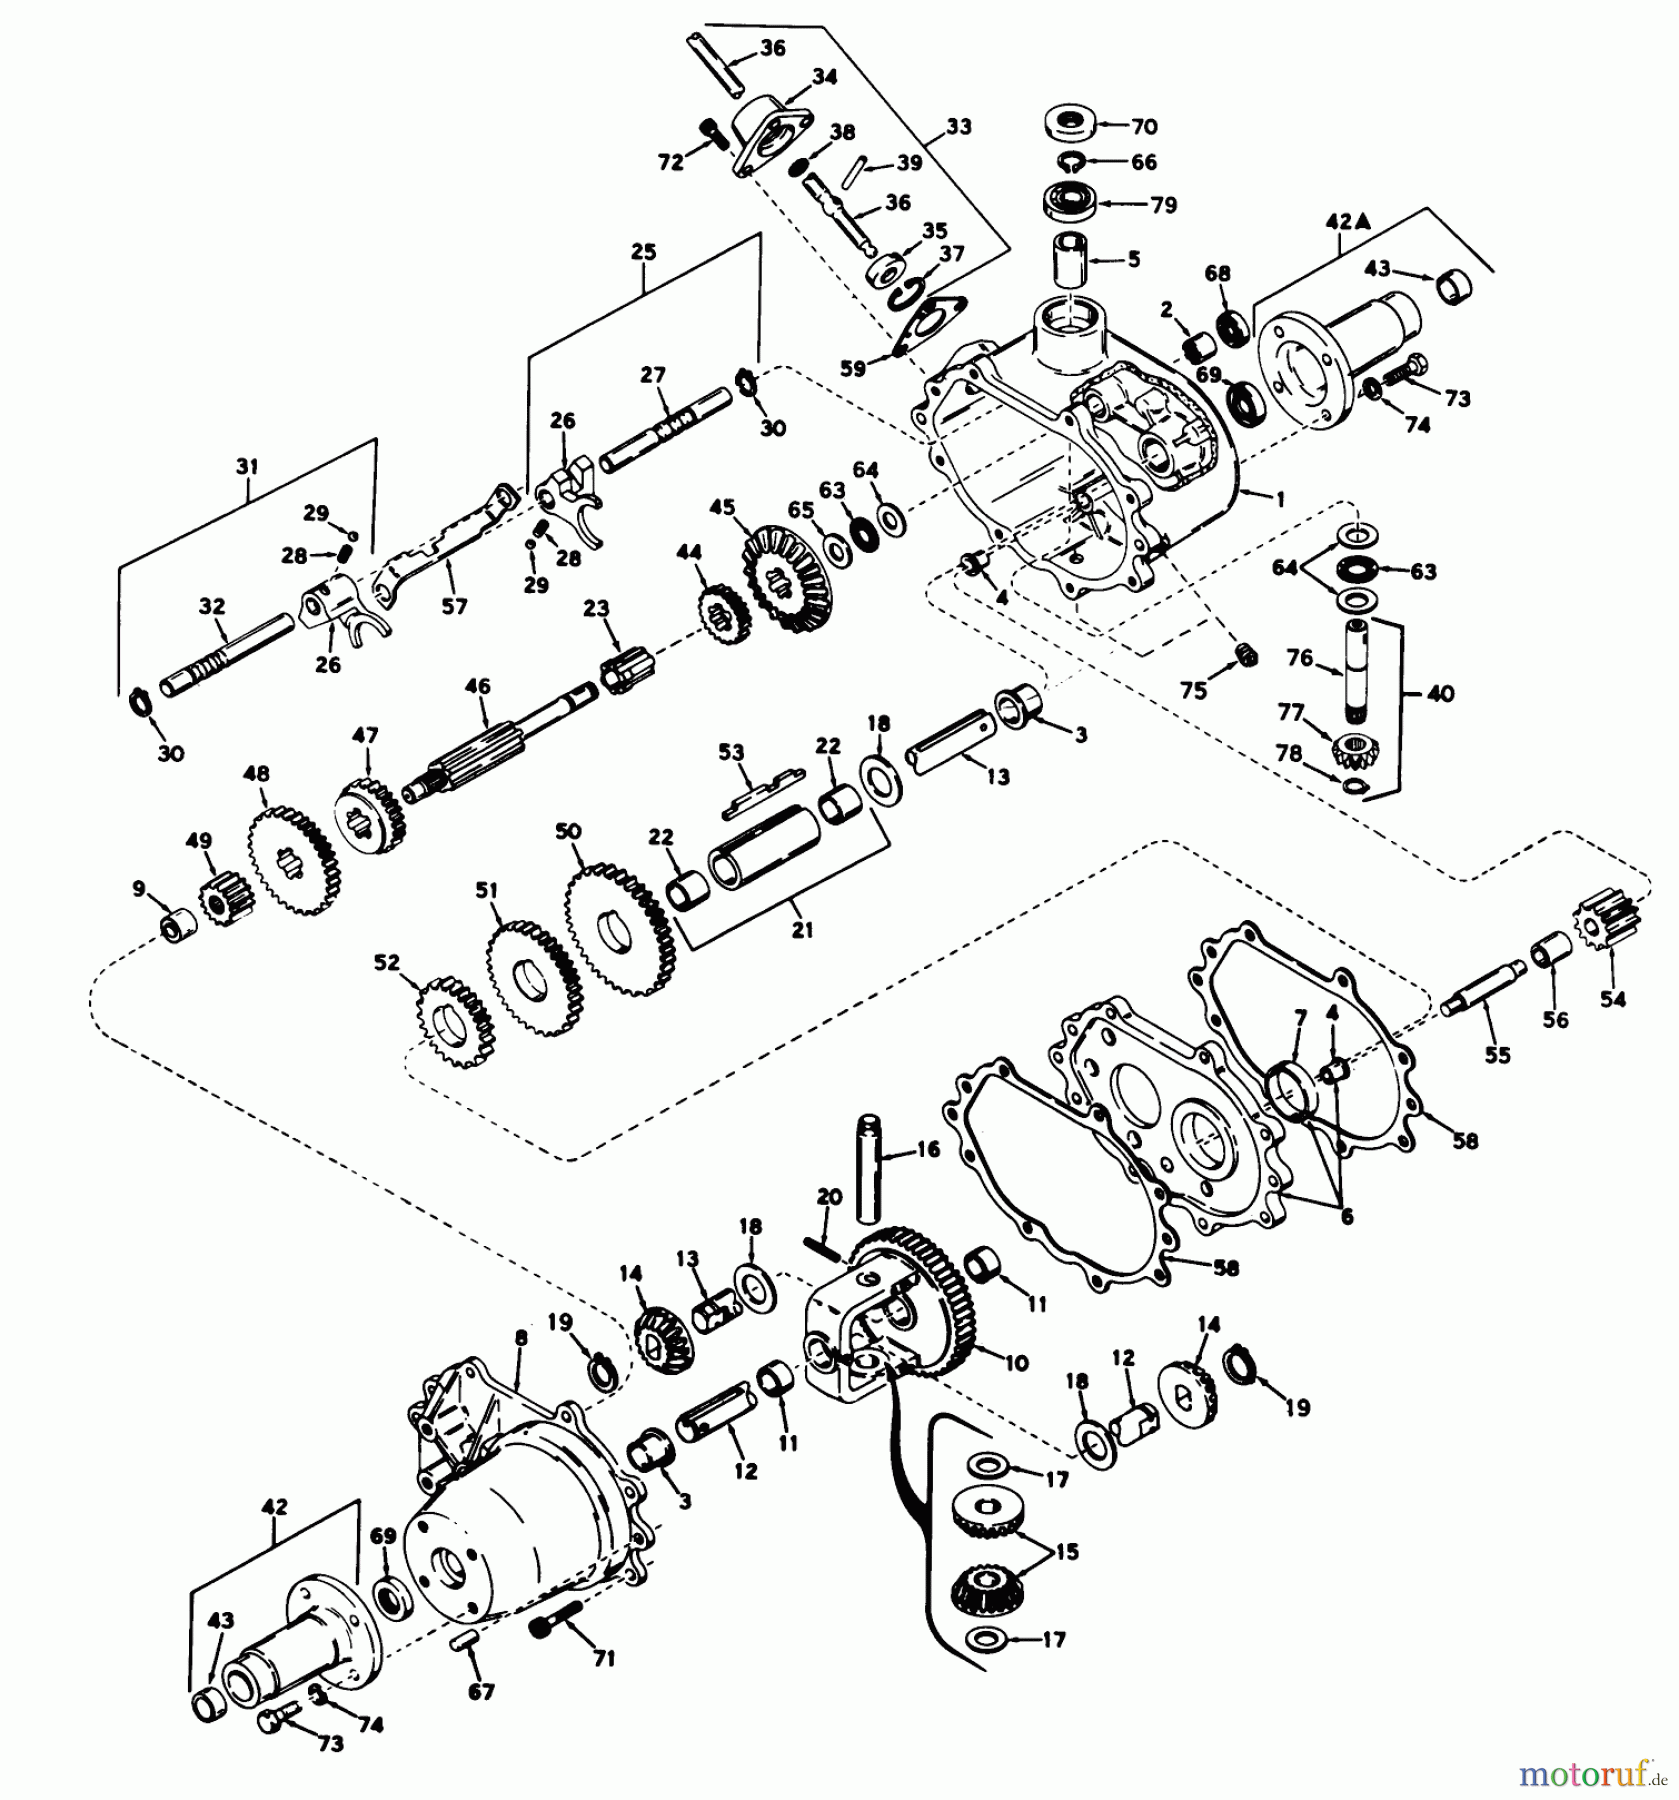  Toro Neu Mowers, Lawn & Garden Tractor Seite 1 55050 (935) - Toro 935 Electric Lawn Tractor, 1969 (9000001-9999999) TRANSAXLE MODEL NO. 615 PARTS LIST